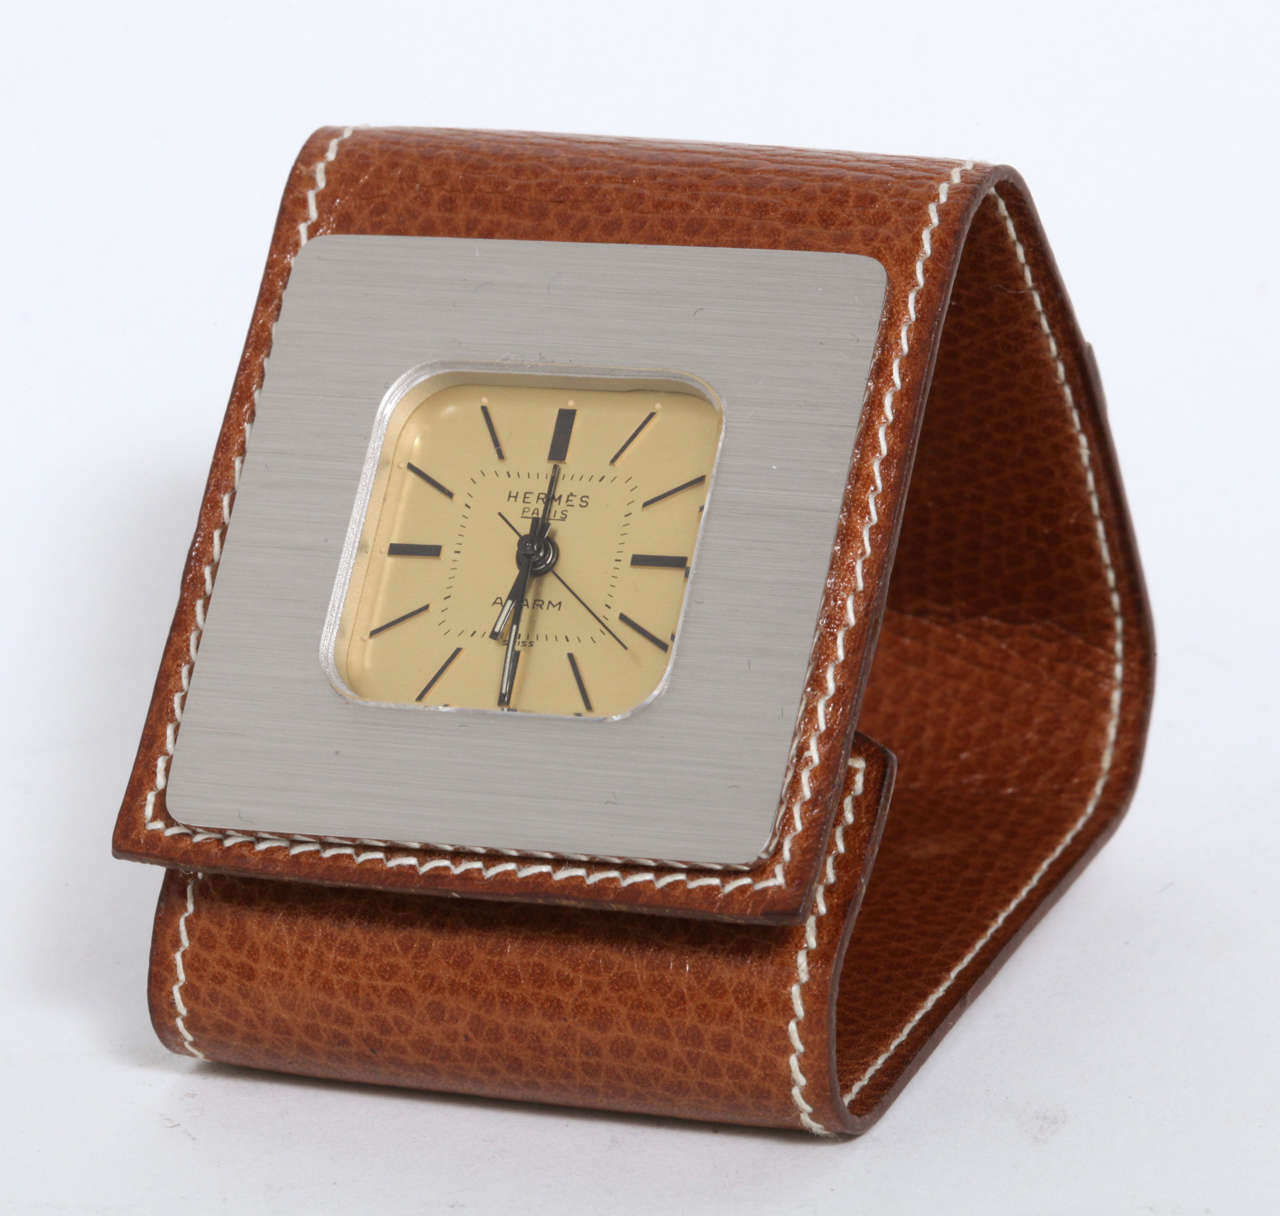 An elegant folding leather clock by Hermes